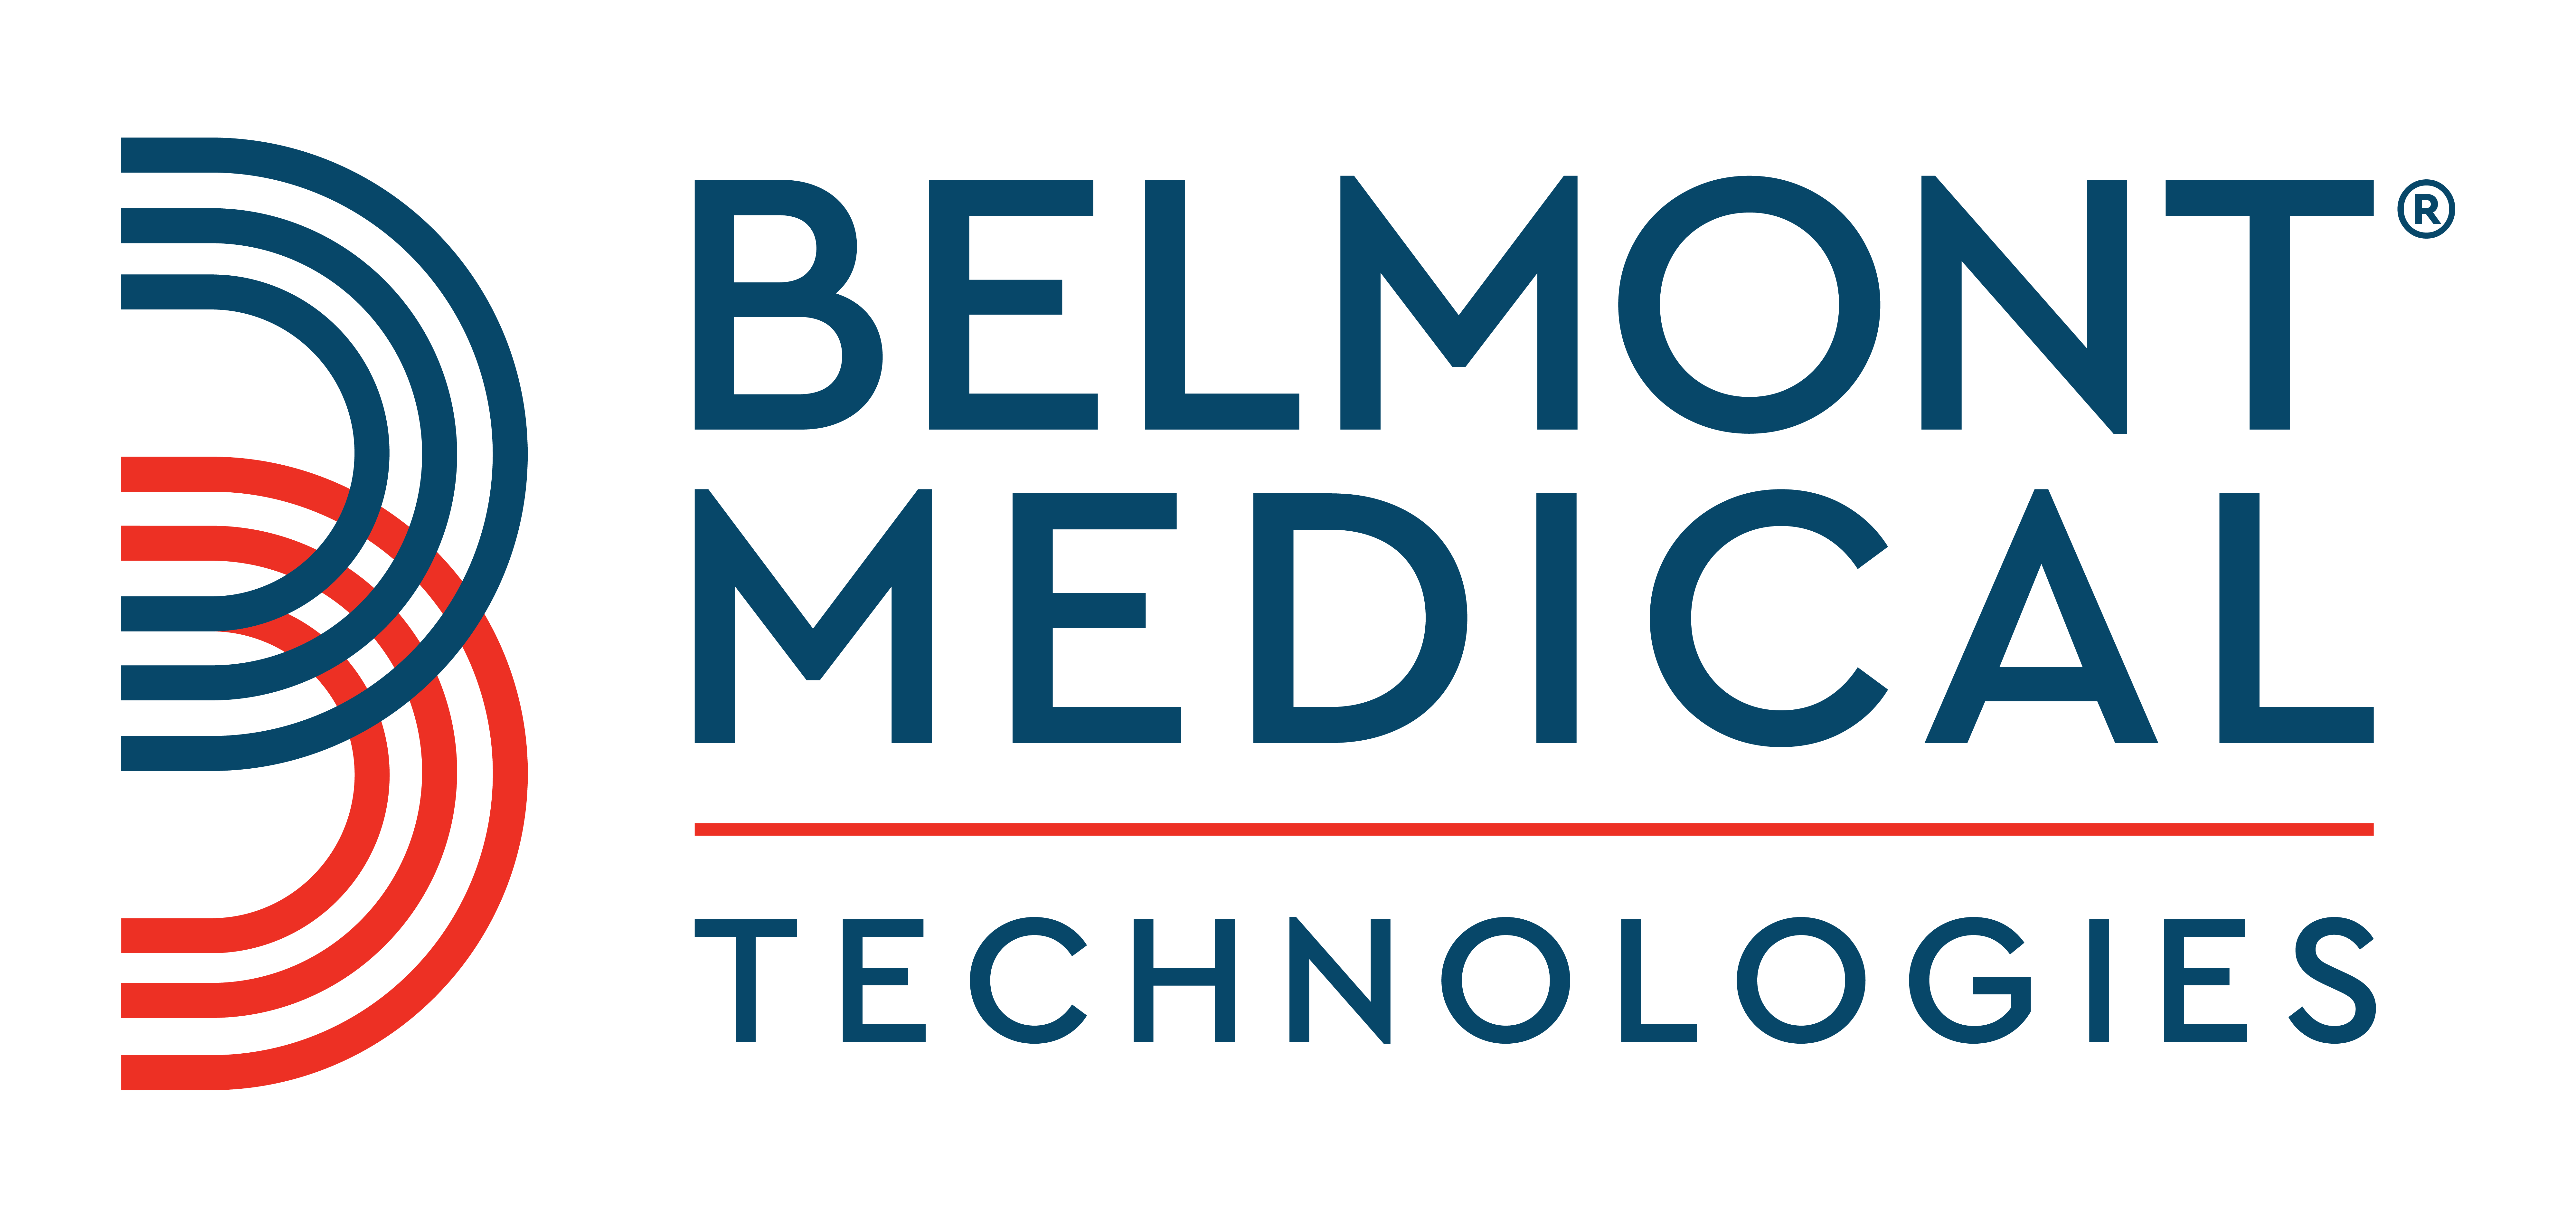 Belmont Technologies